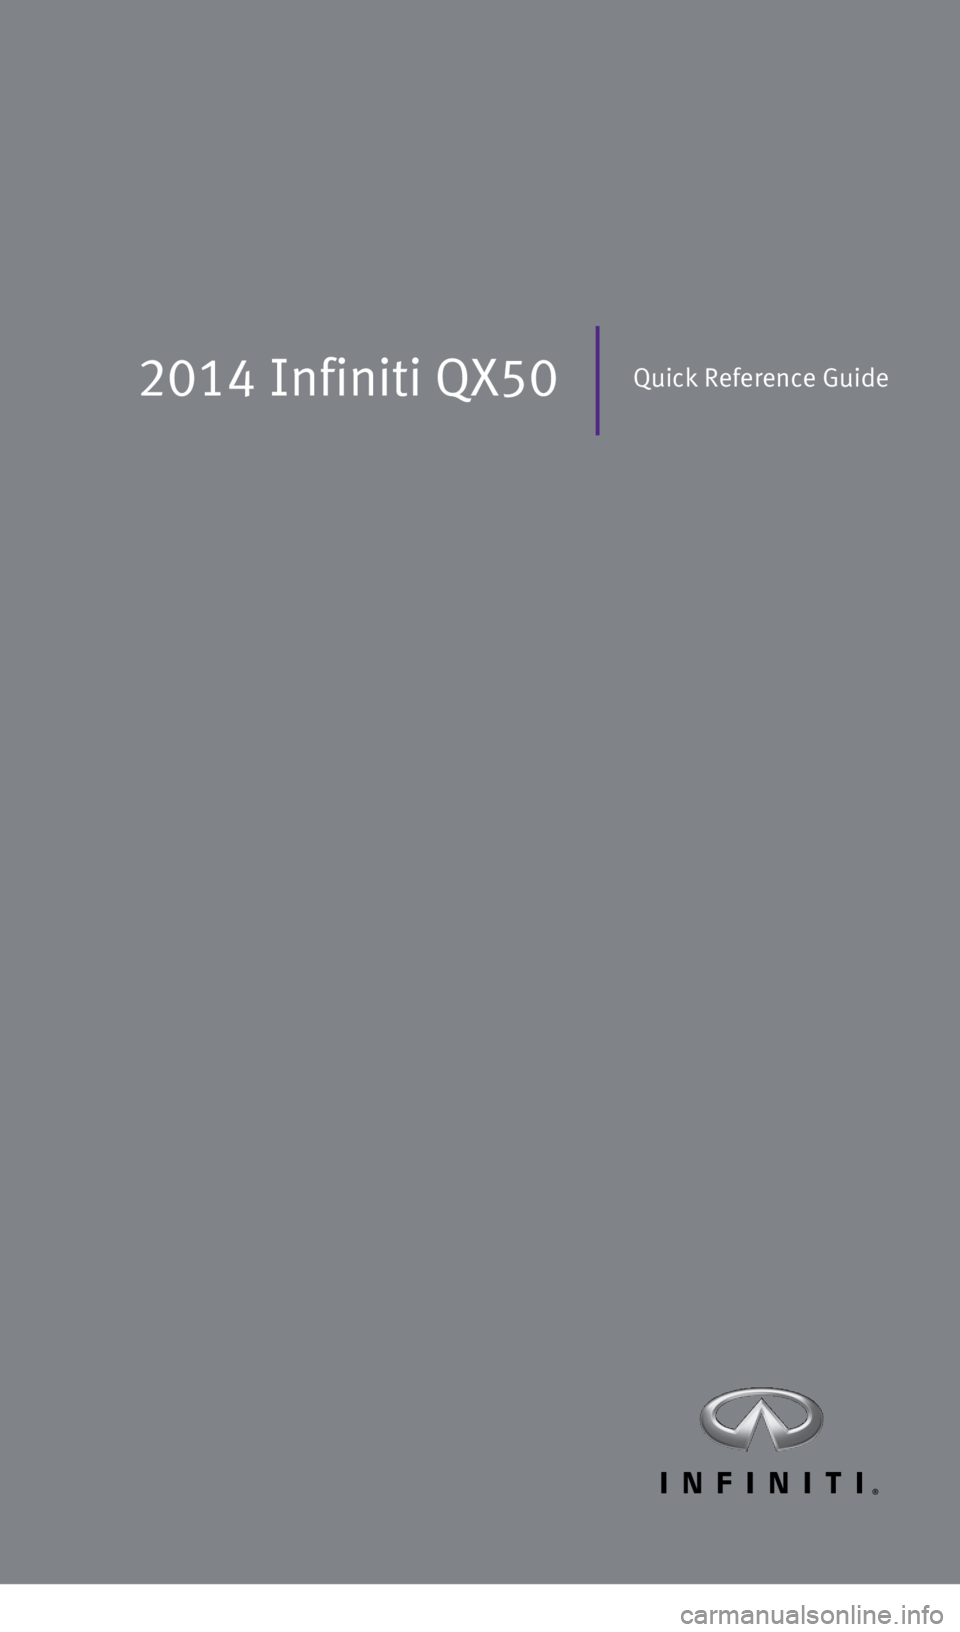 INFINITI QX50 2014  Quick Reference Guide 2014 Infiniti QX50Quick Reference Guide
1378280_14a_Infiniti_QX50_QRG_060613.indd   26/6/13   10:21 AM 